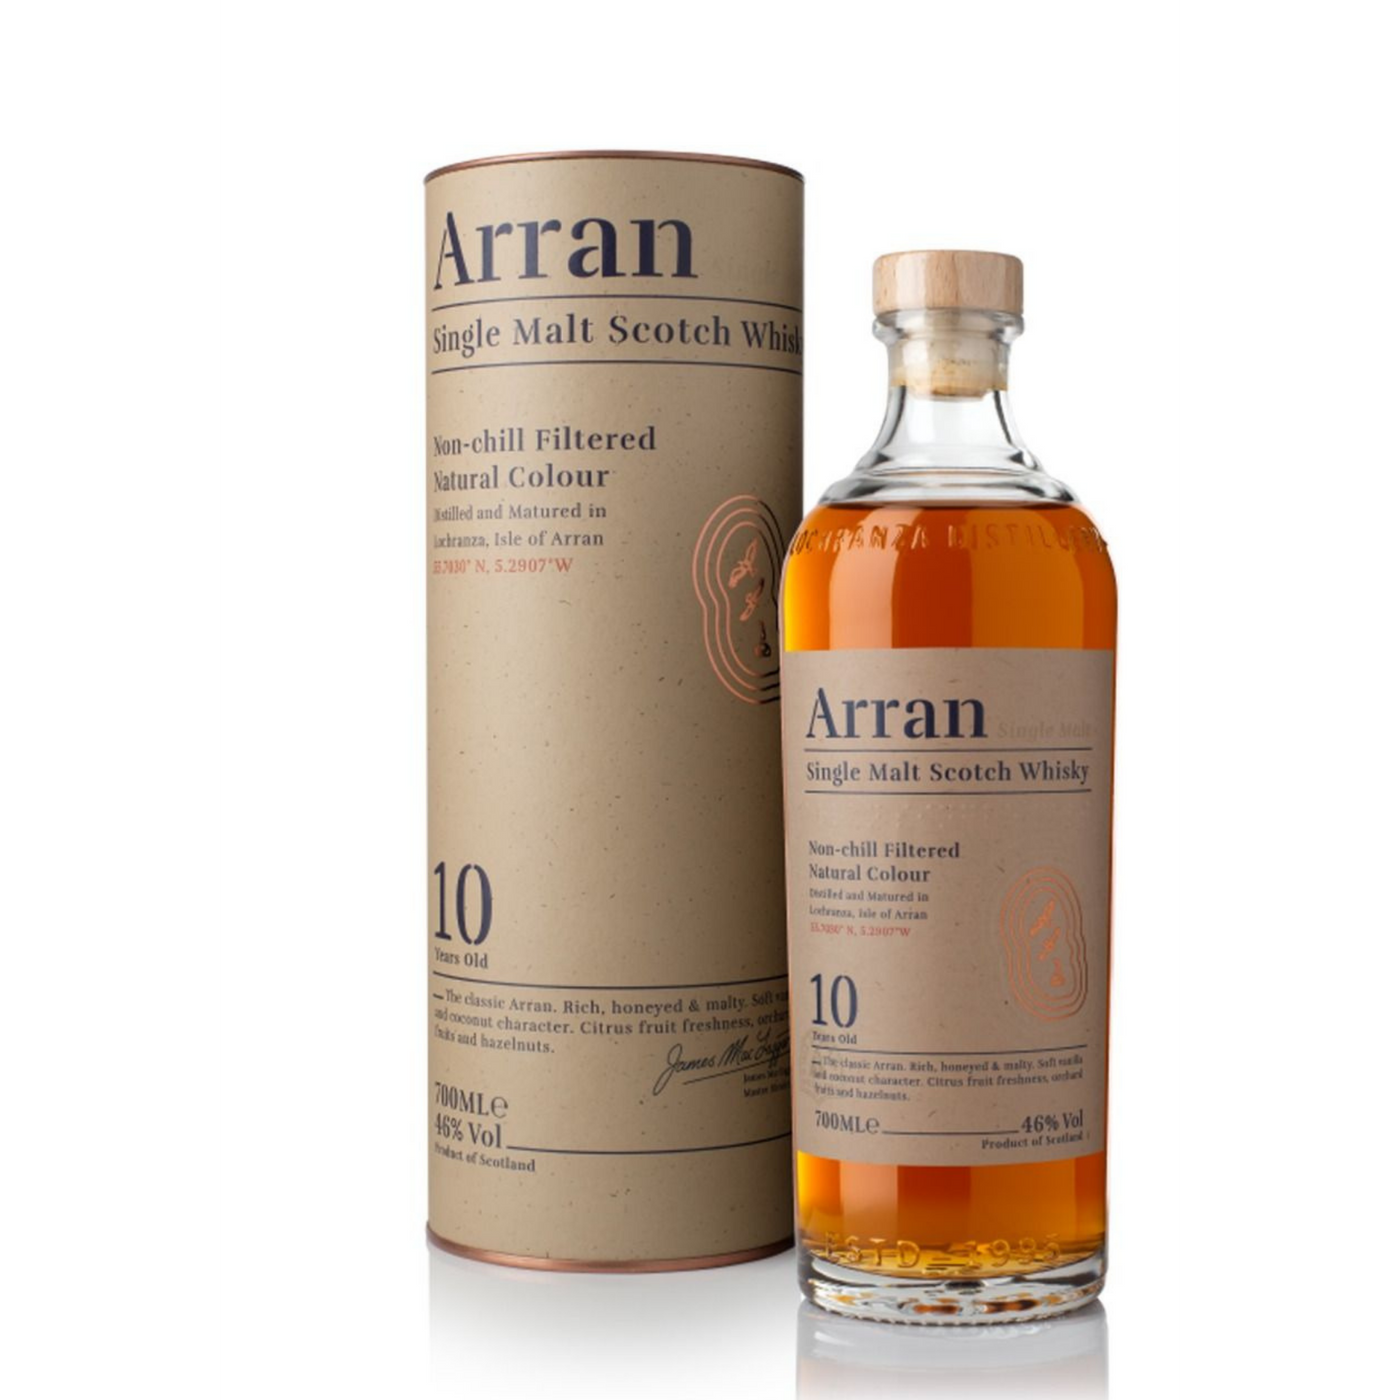 The Arran Single Malt Whisky 10 year old 70cl